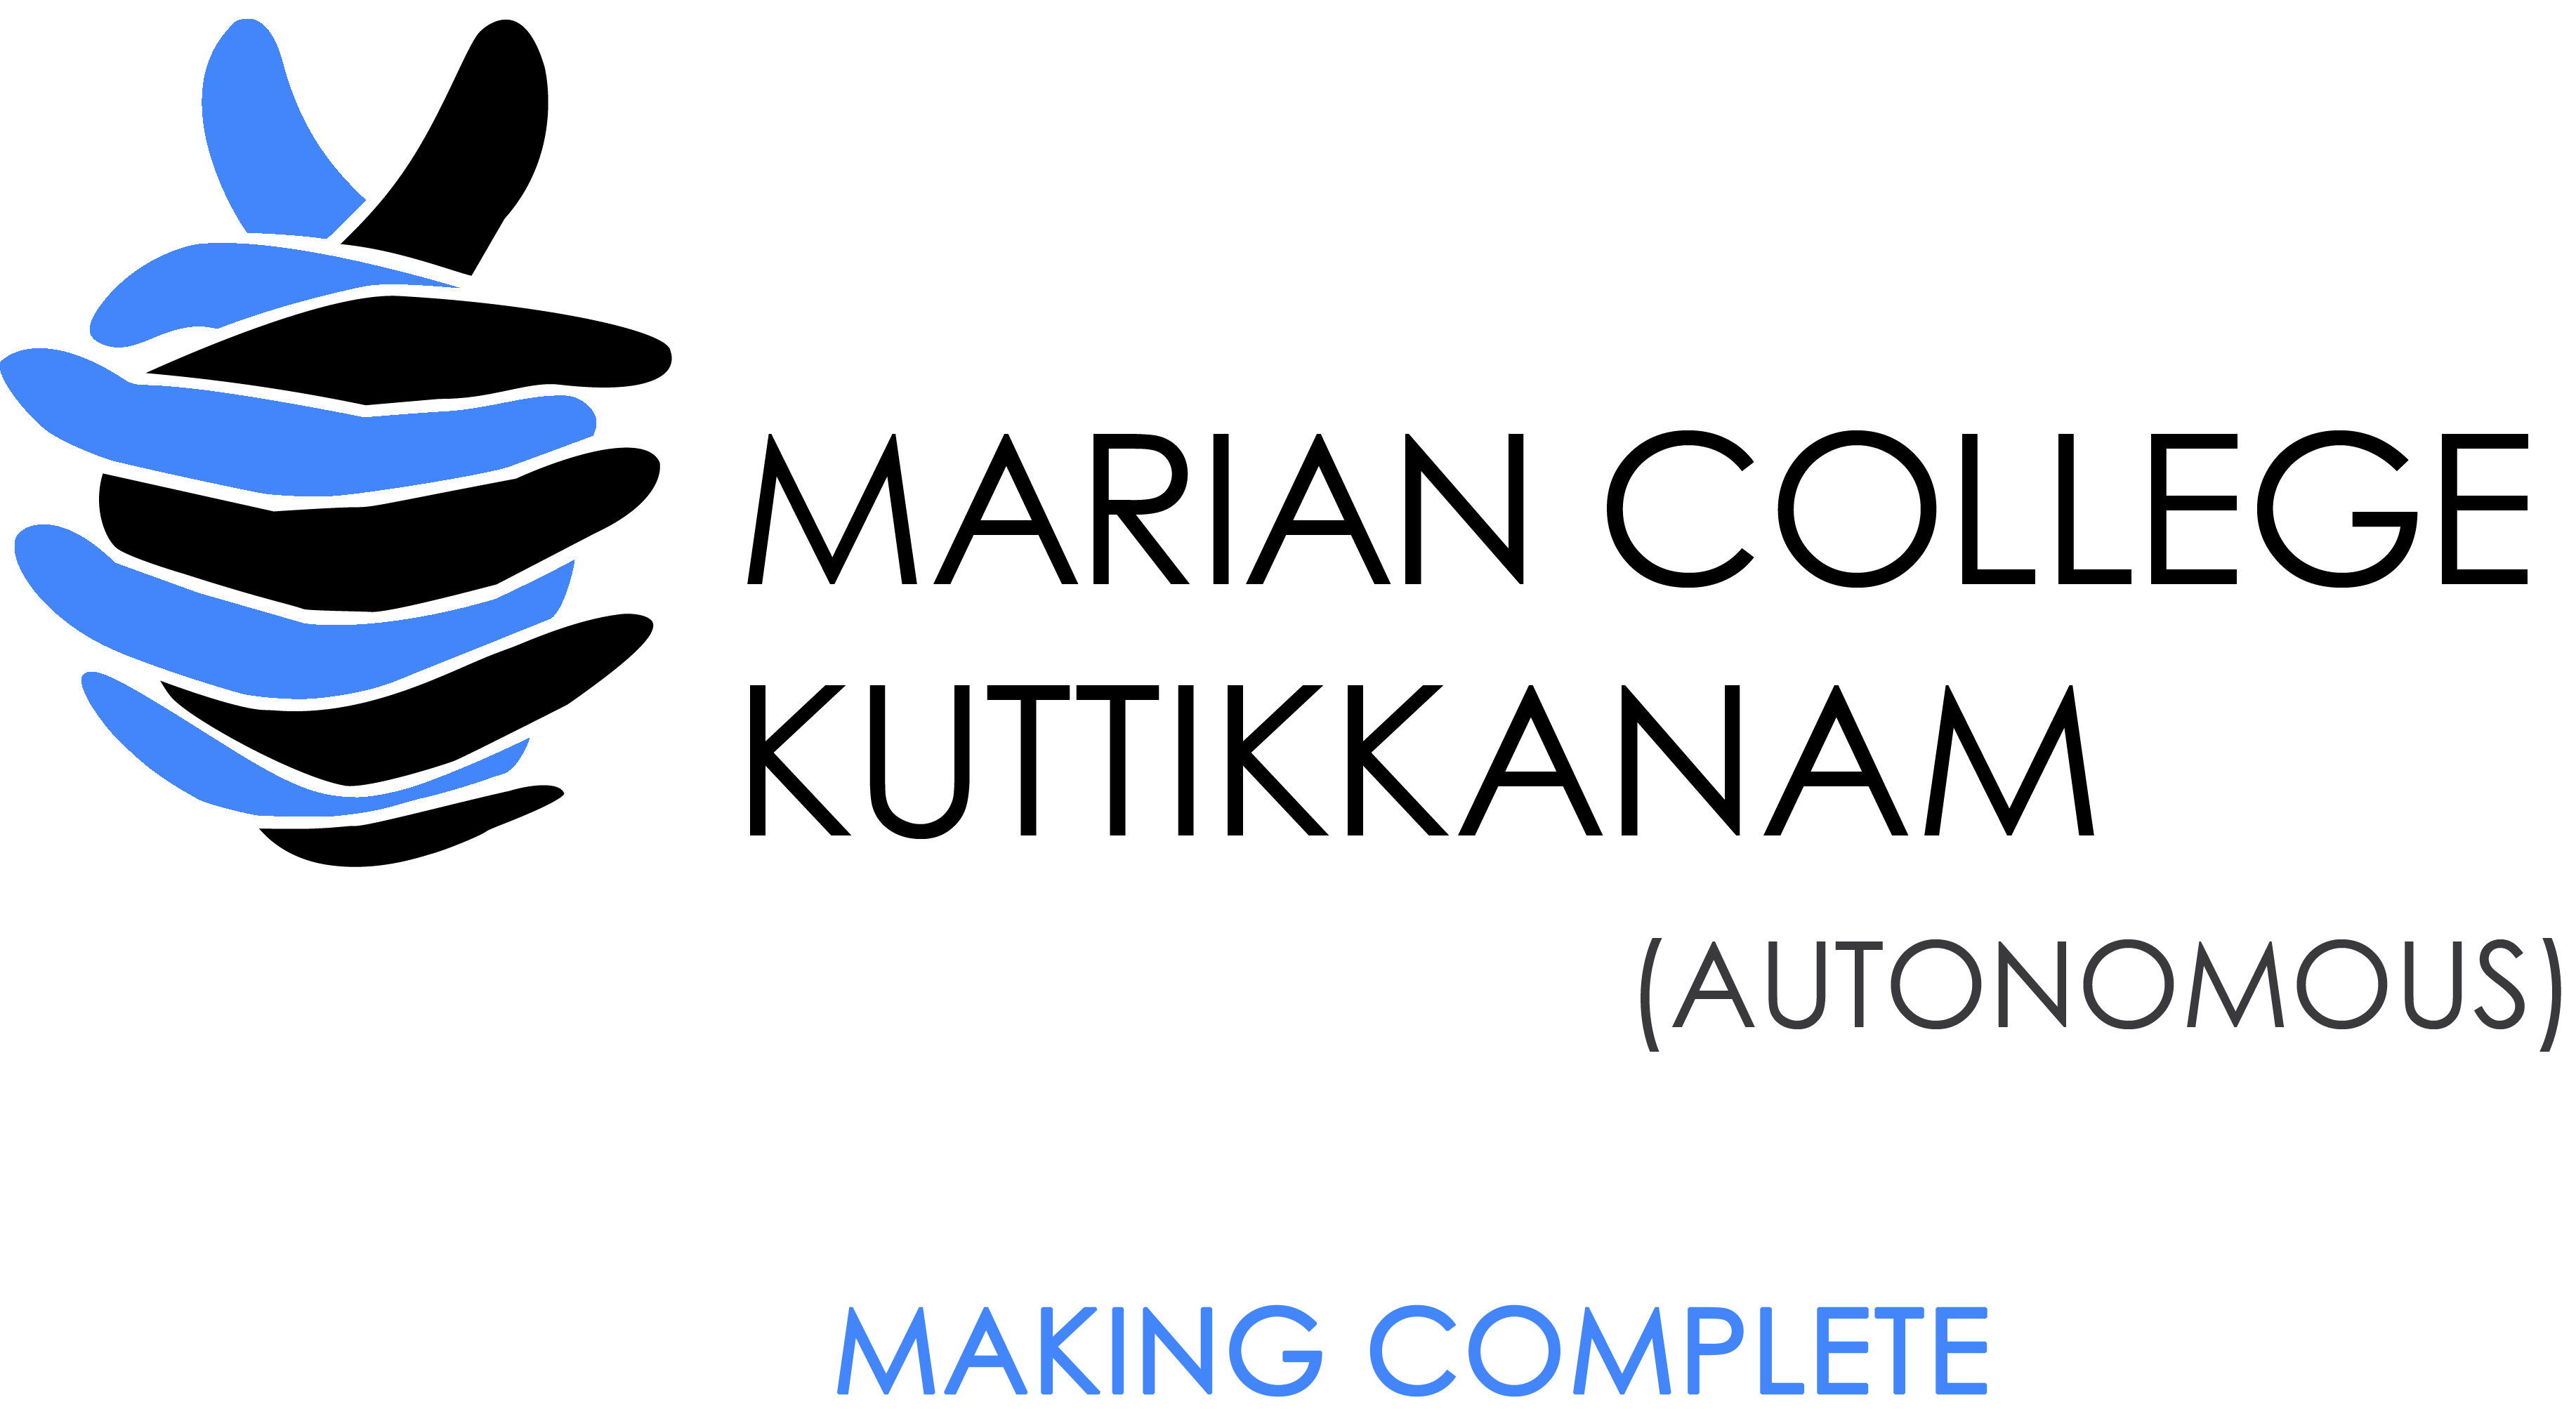 Top College Logo - MARIAN COLLEGE KUTTIKKANAM (Autonomous), College with the highest